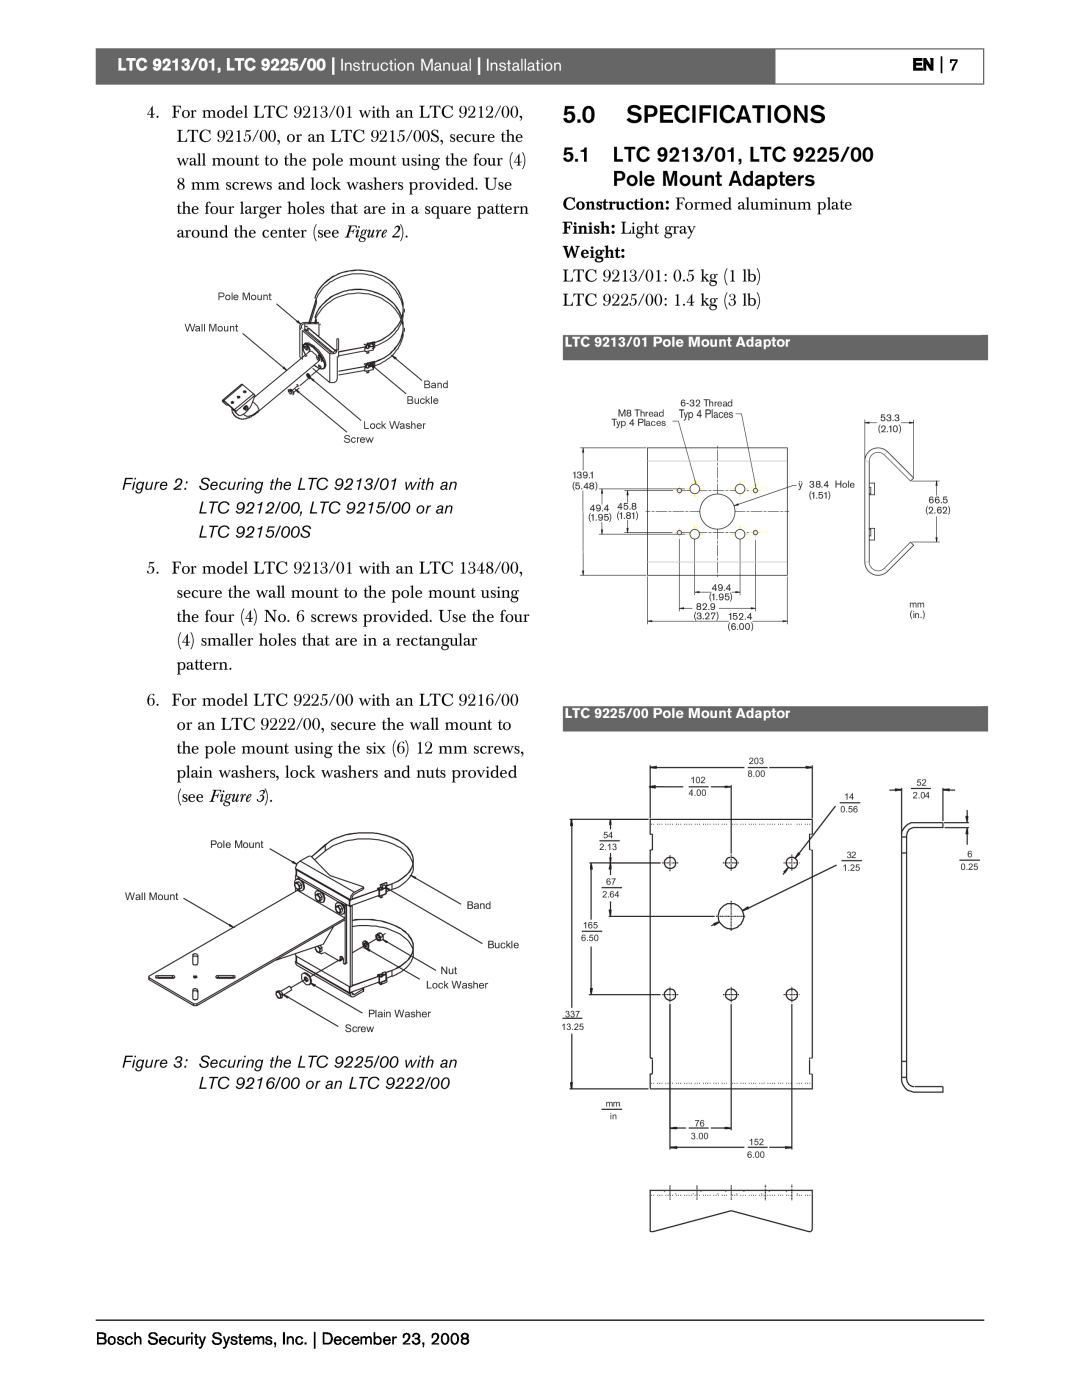 Bosch Appliances instruction manual 5.0SPECIFICATIONS, 5.1LTC 9213/01, LTC 9225/00 Pole Mount Adapters, see Figure 